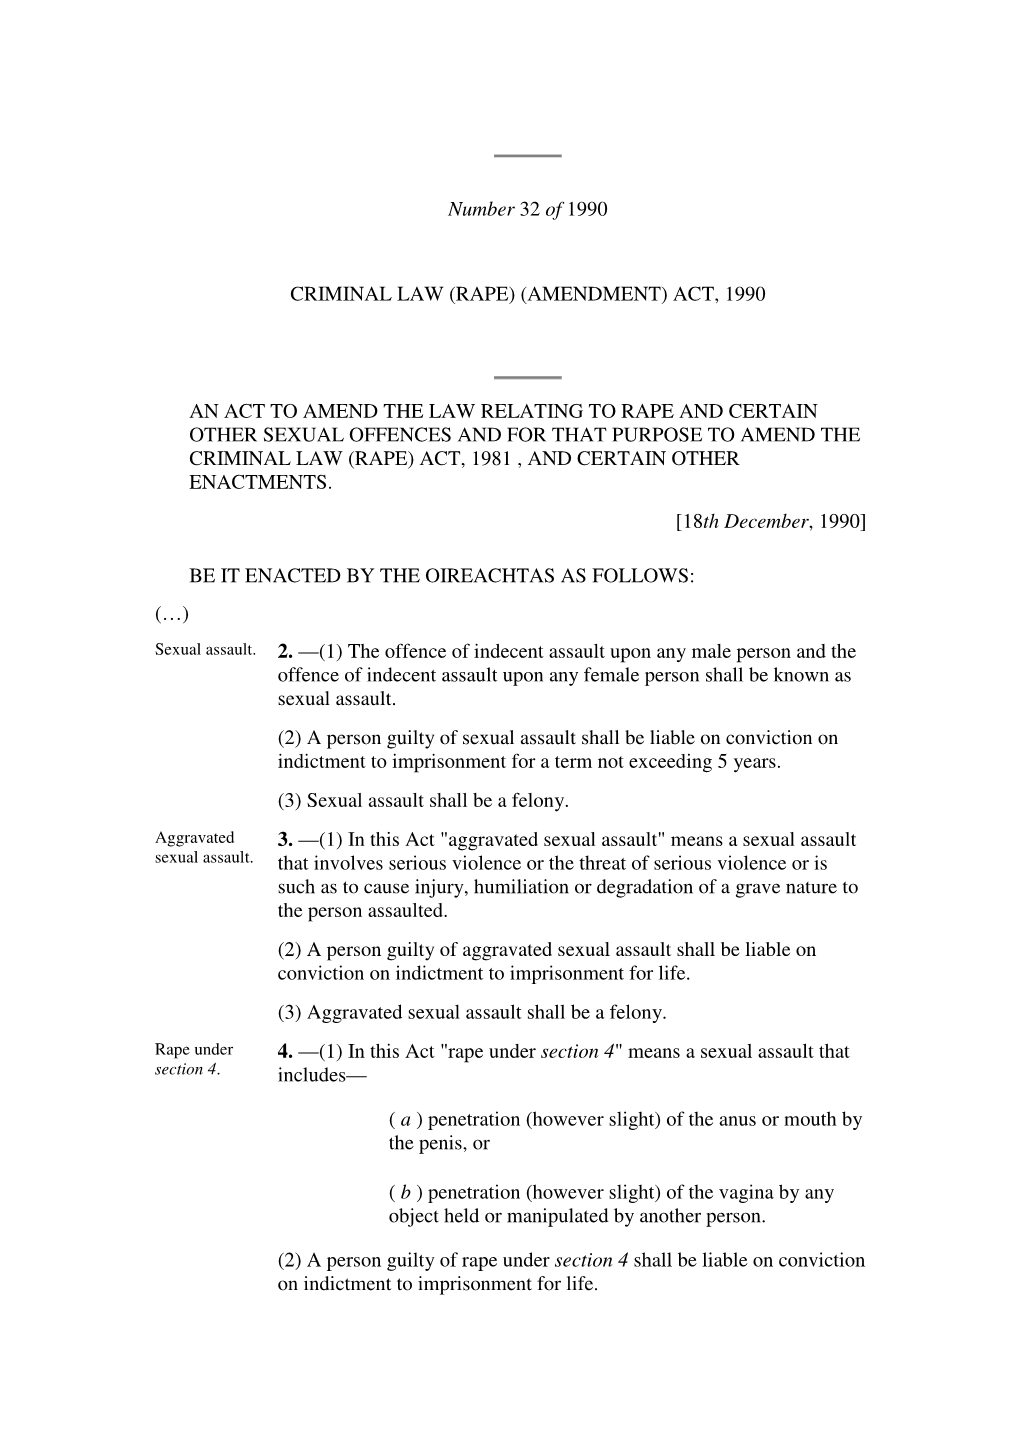 Rape) (Amendment) Act, 1990